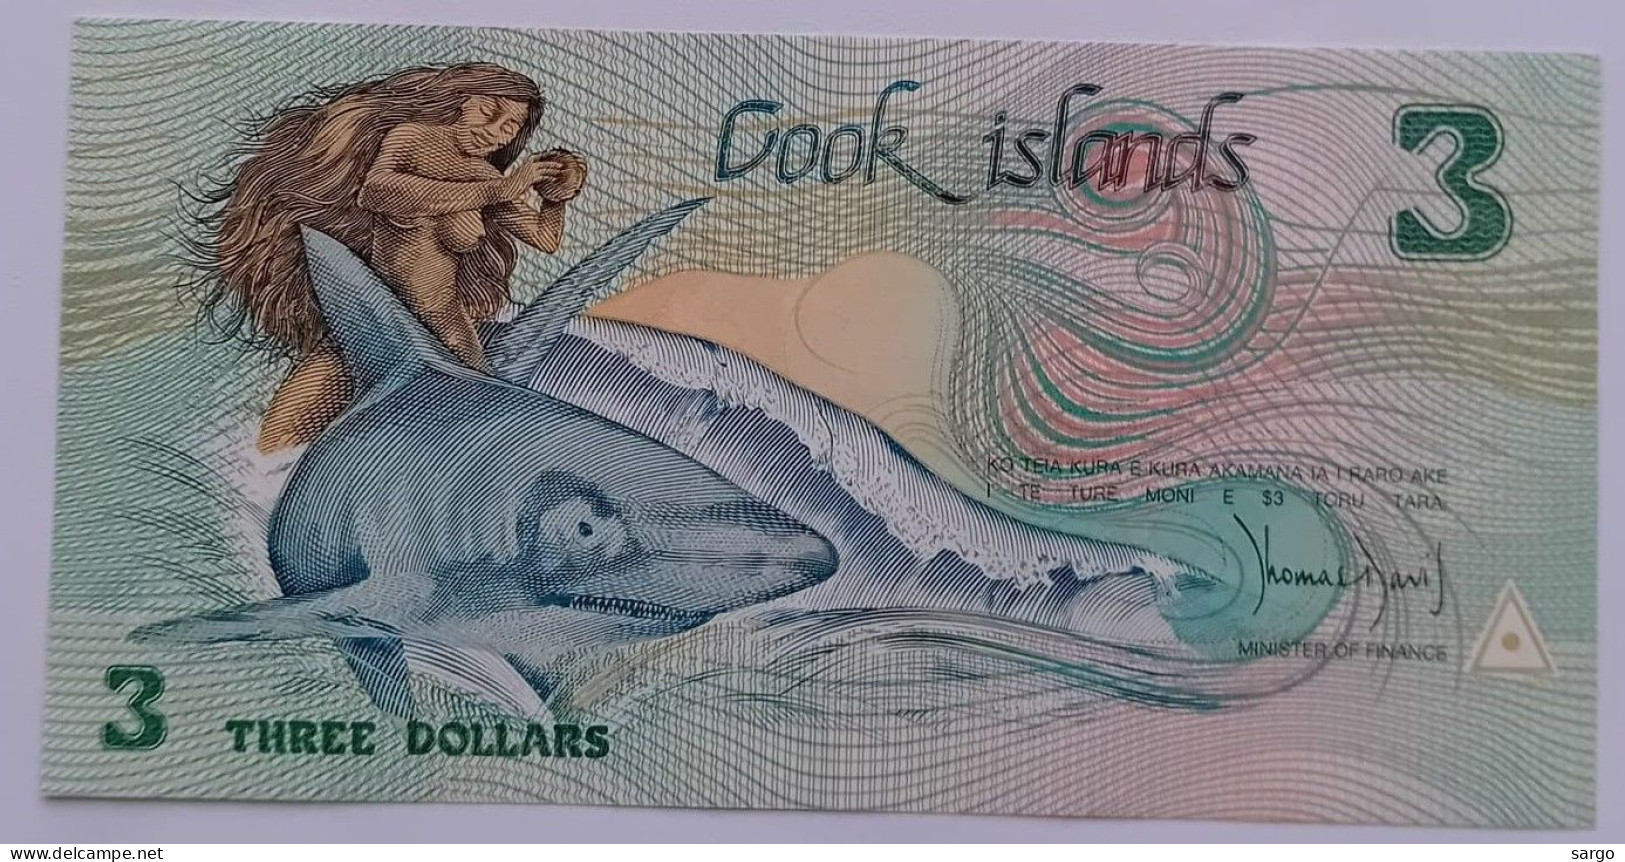 COOK ISLANDS - 3 DOLLARS - 1992 - UNC - P 6  - BANKNOTES - PAPER MONEY - CARTAMONETA - - Islas Cook